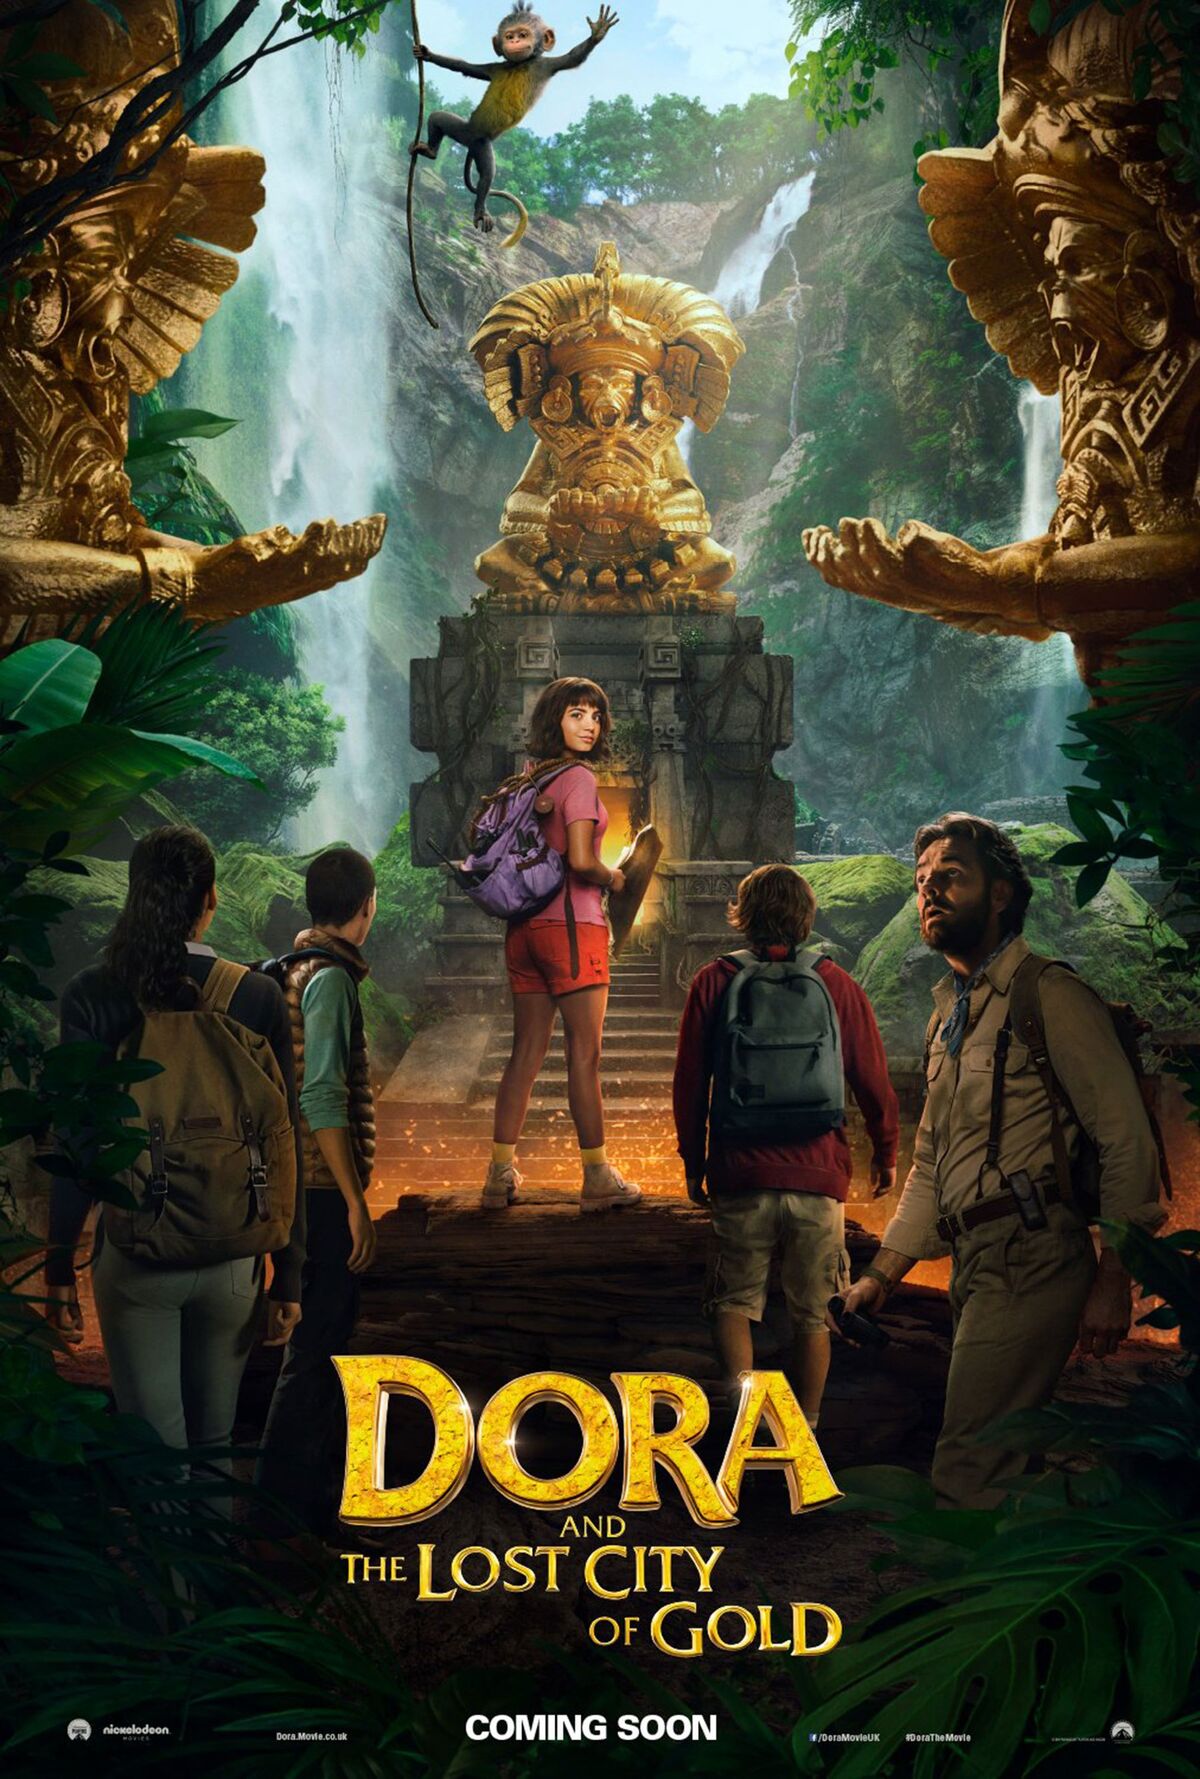 Watch Dora the Explorer Online - Full Episodes - All Seasons - Yidio